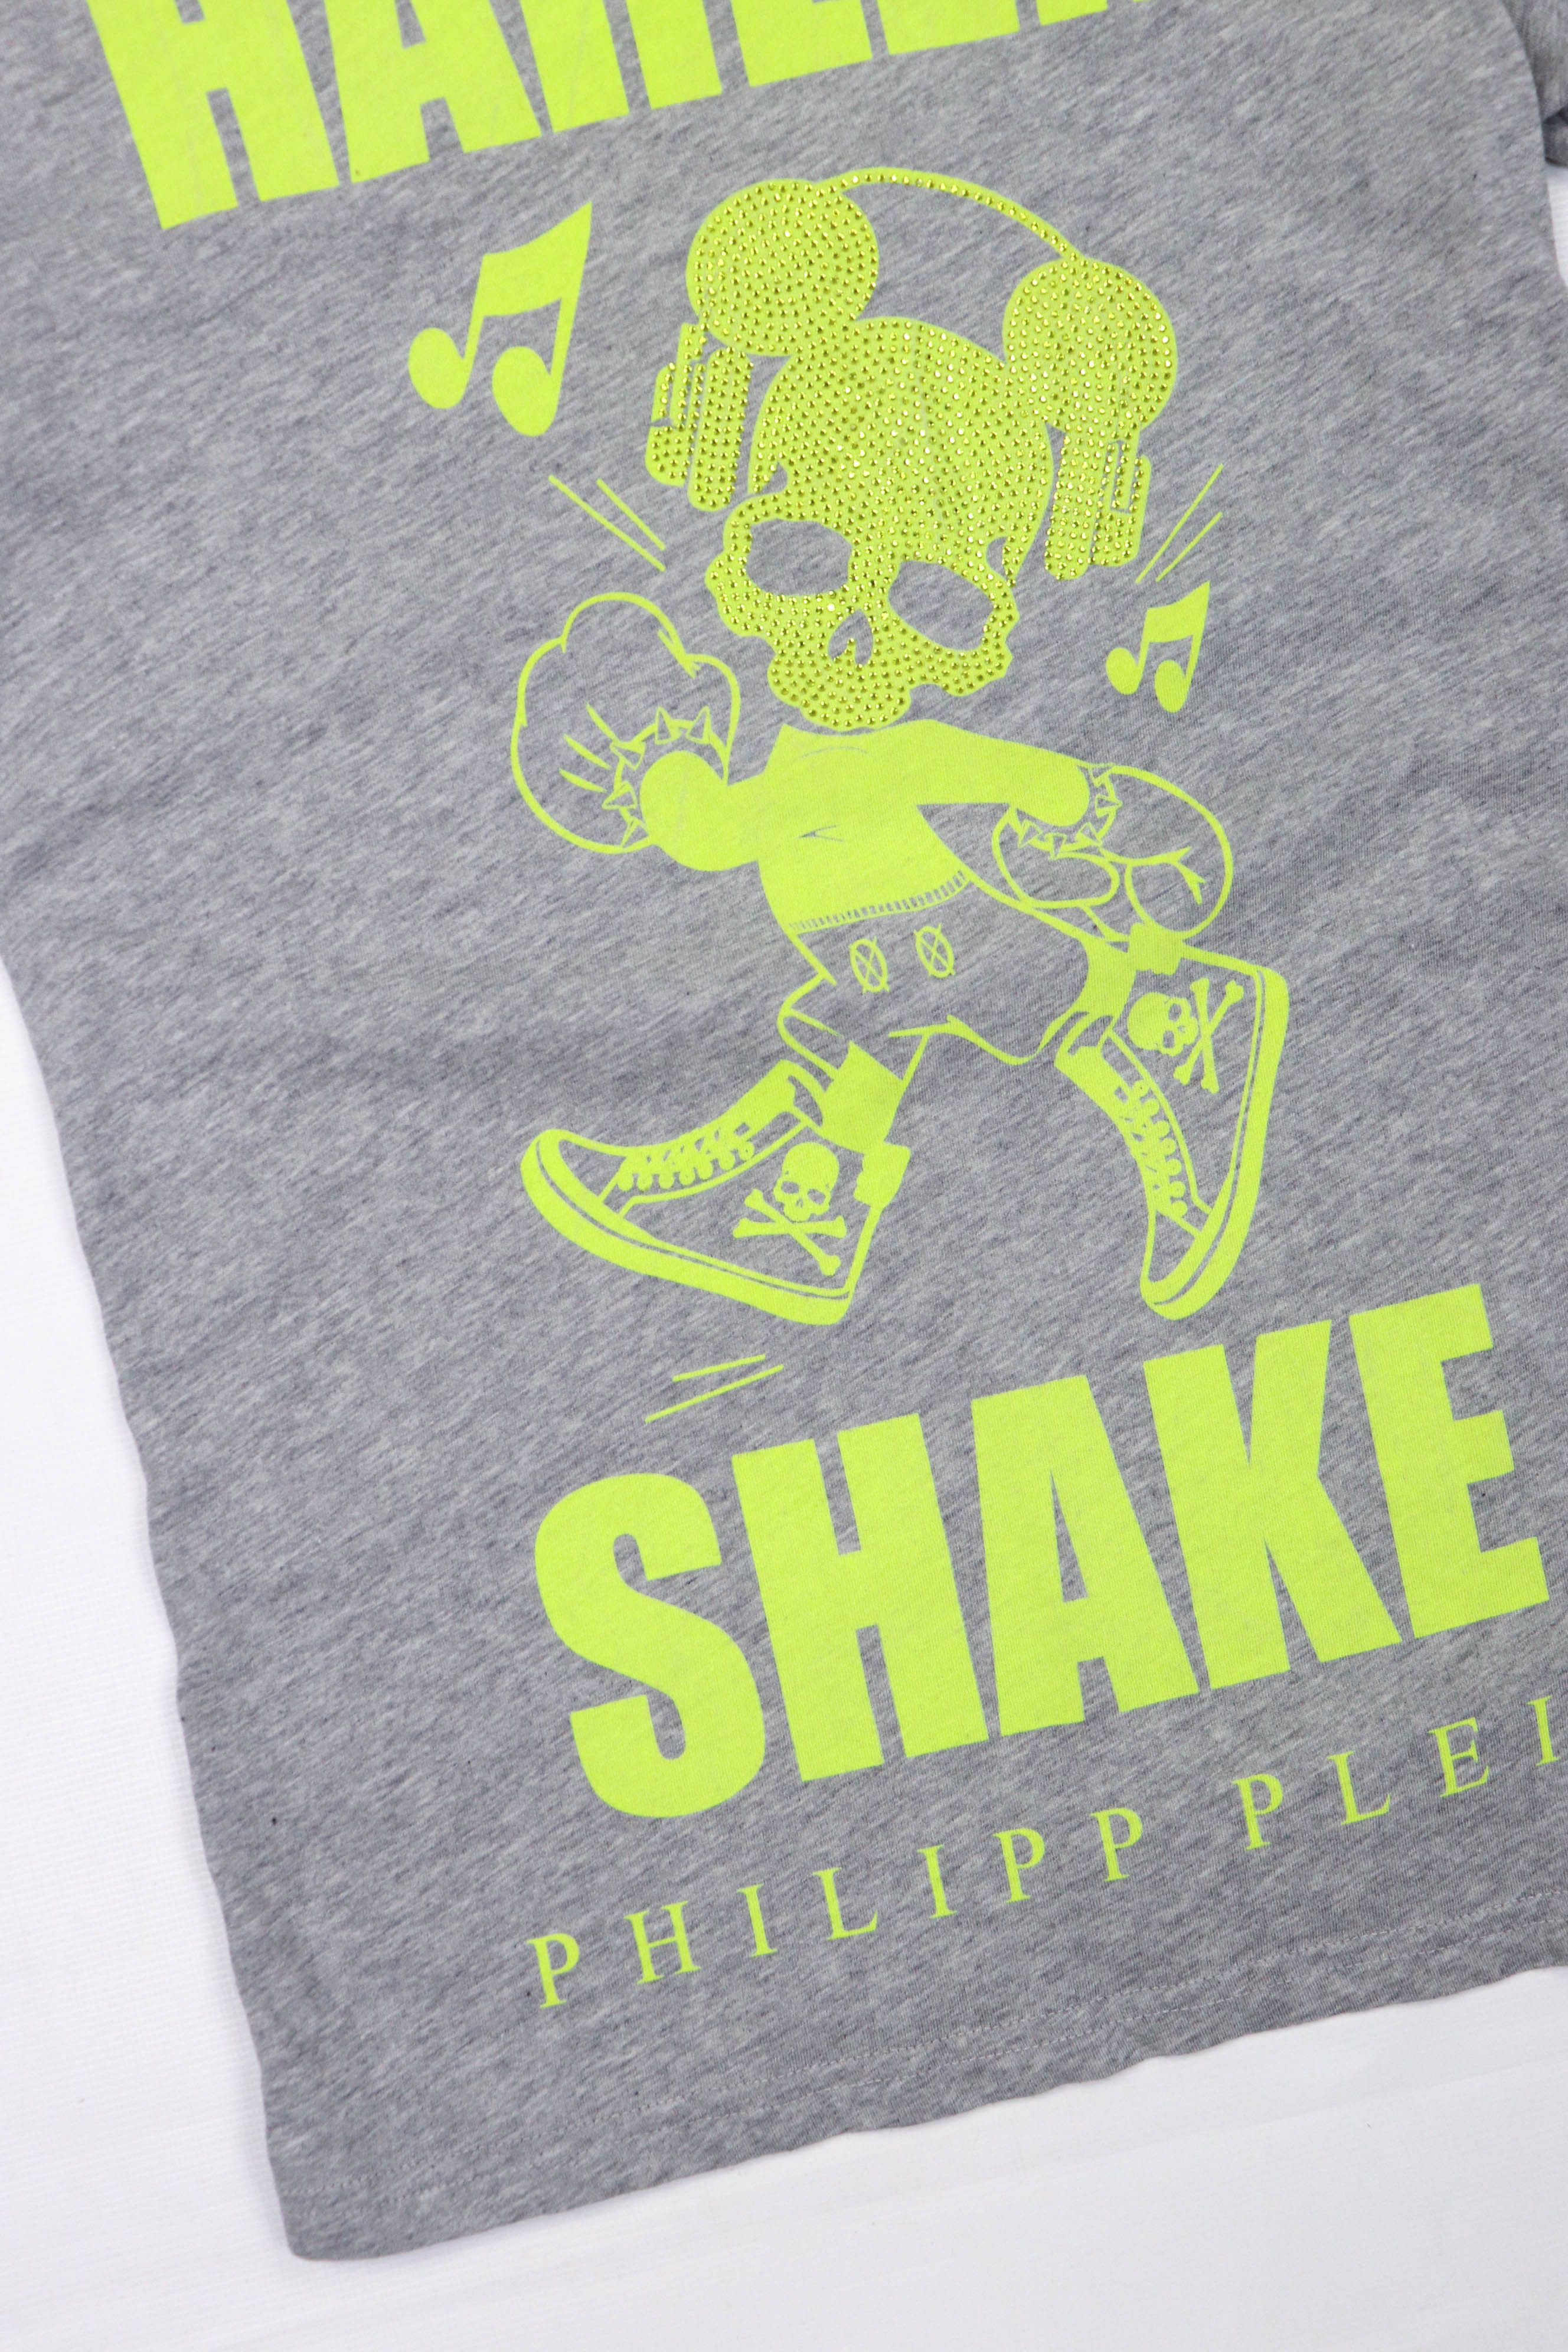 Philipp Plein Philipp Plein HOMME Harlem Shake Graphics Rhinestone T-shirt Size US S / EU 44-46 / 1 - 4 Thumbnail